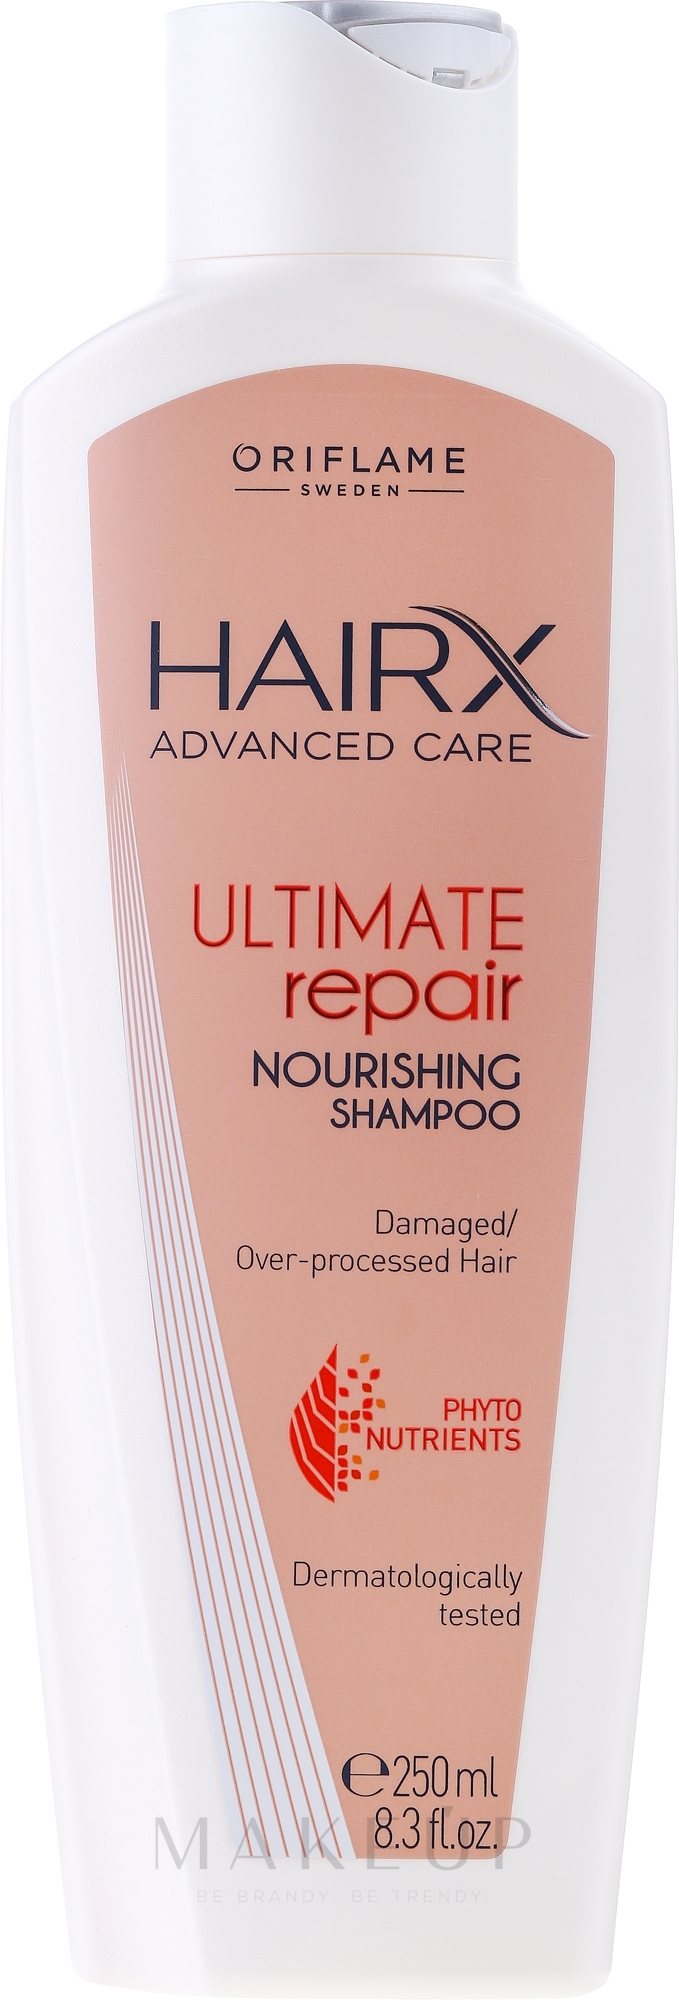 szampon oriflame hair ultimate